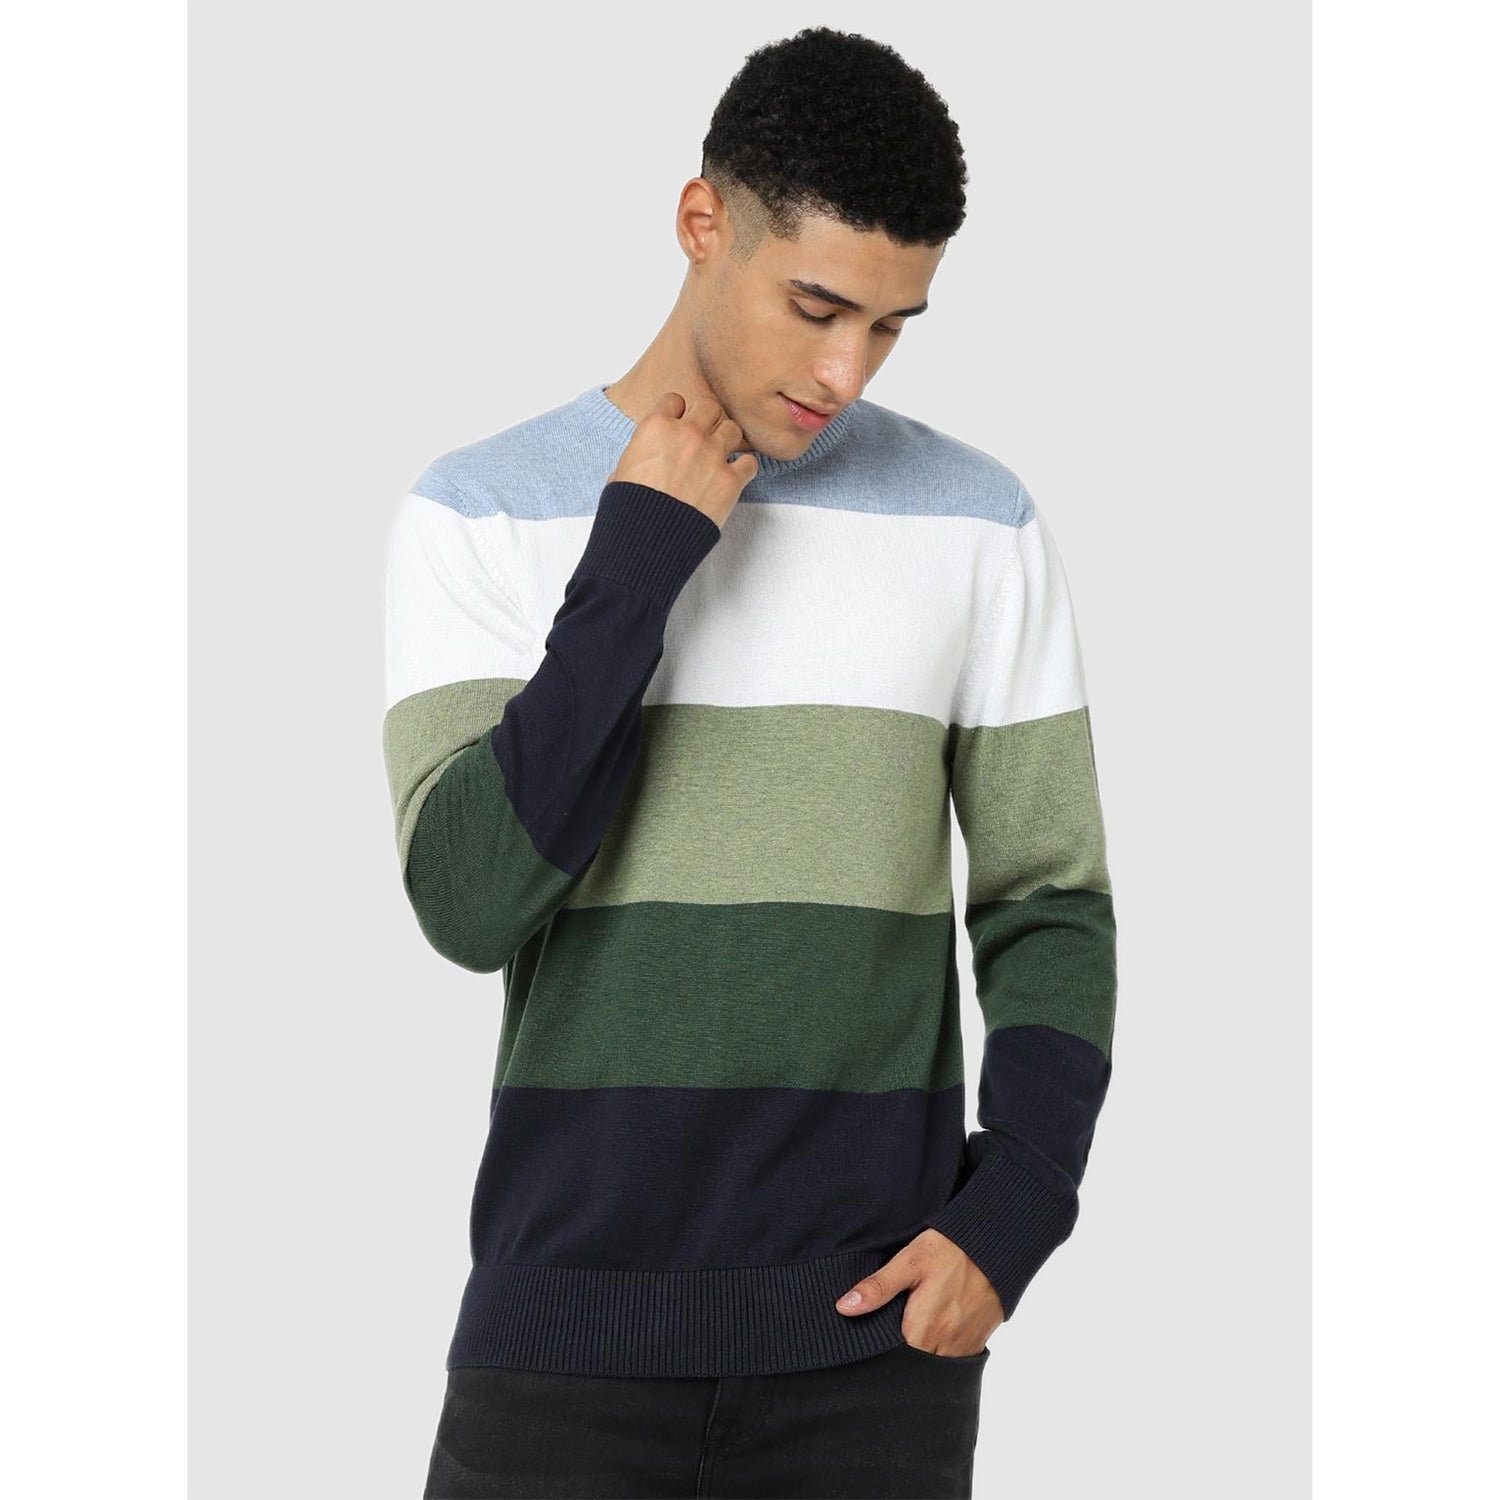 Green Color Regular Fit Block Sweater (Various Sizes)